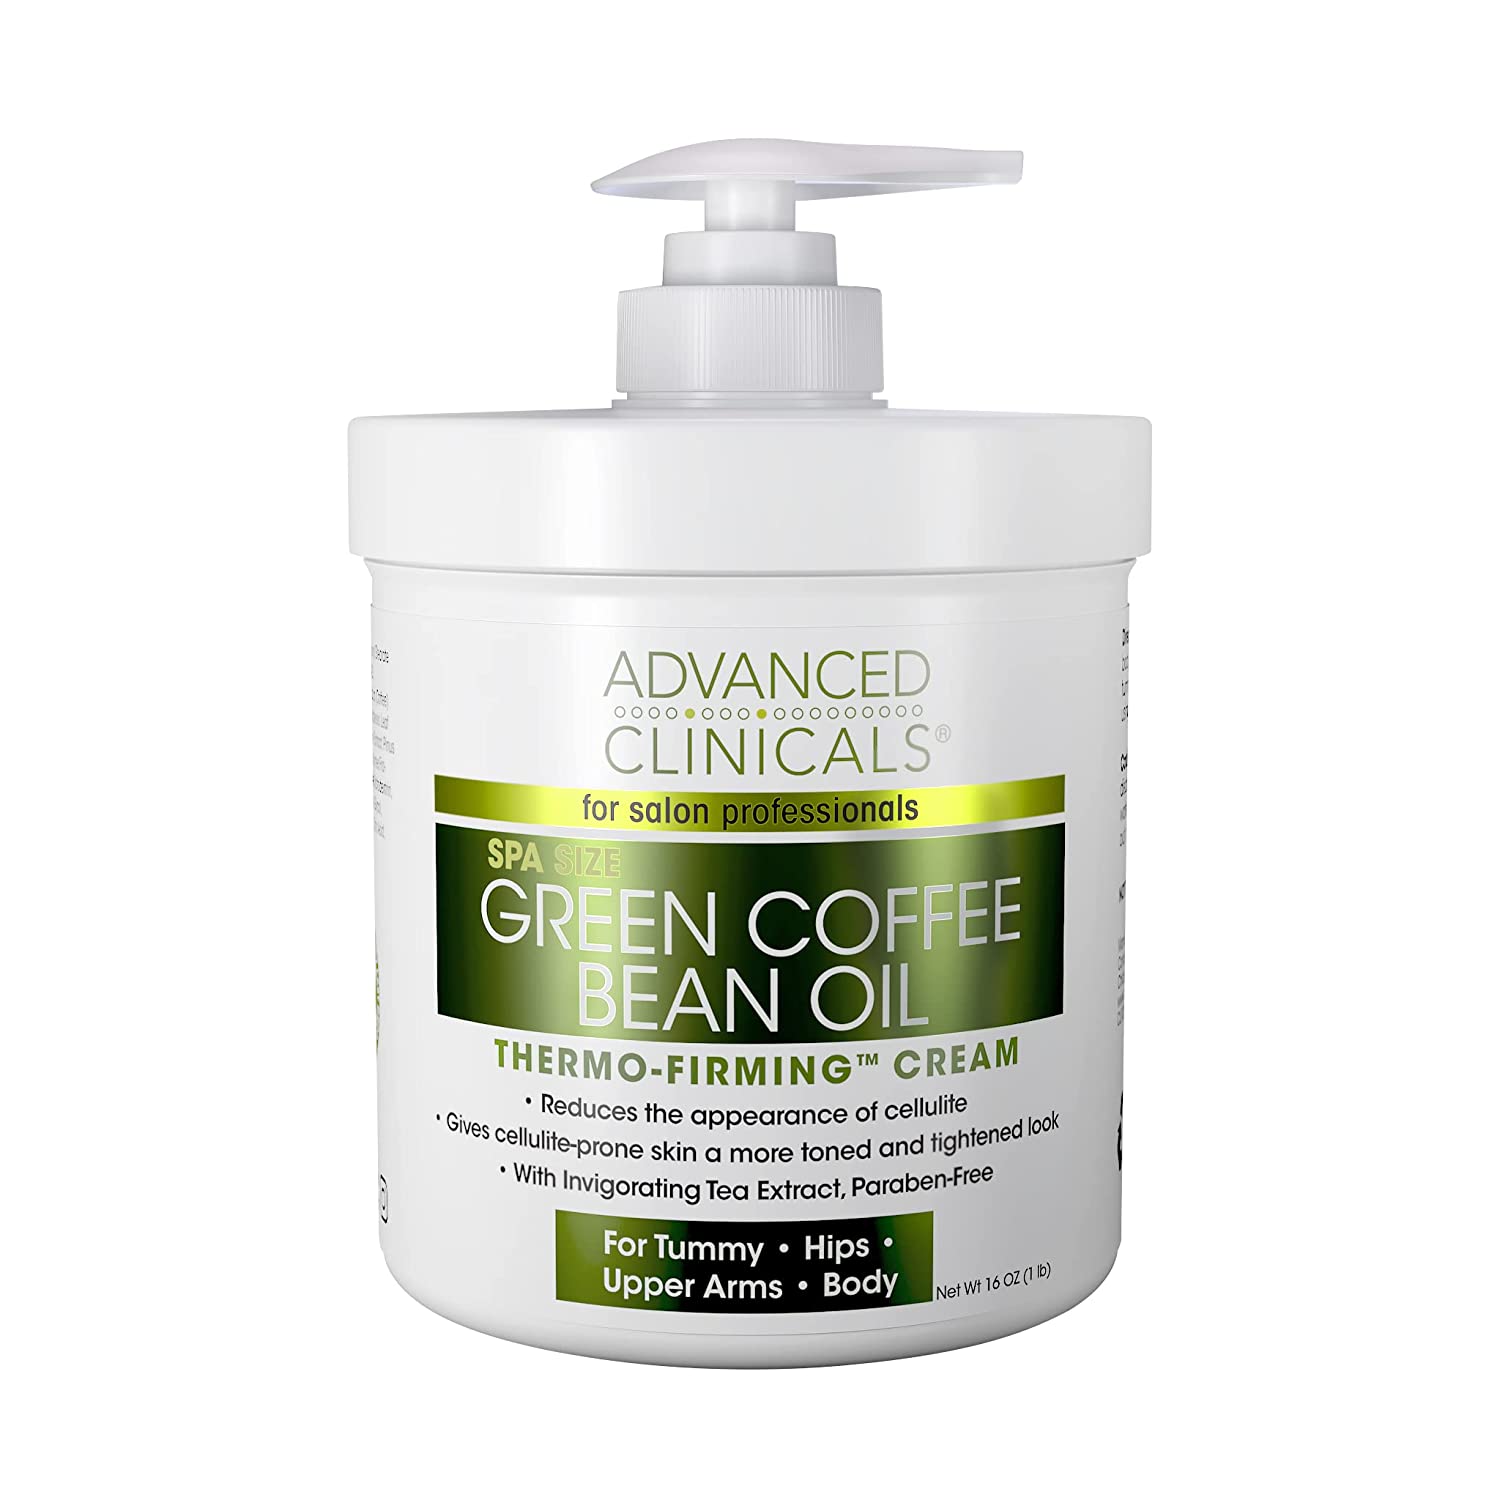 Advanced Clinicals Green Coffee Bean Oil Thermo-Firming Cream